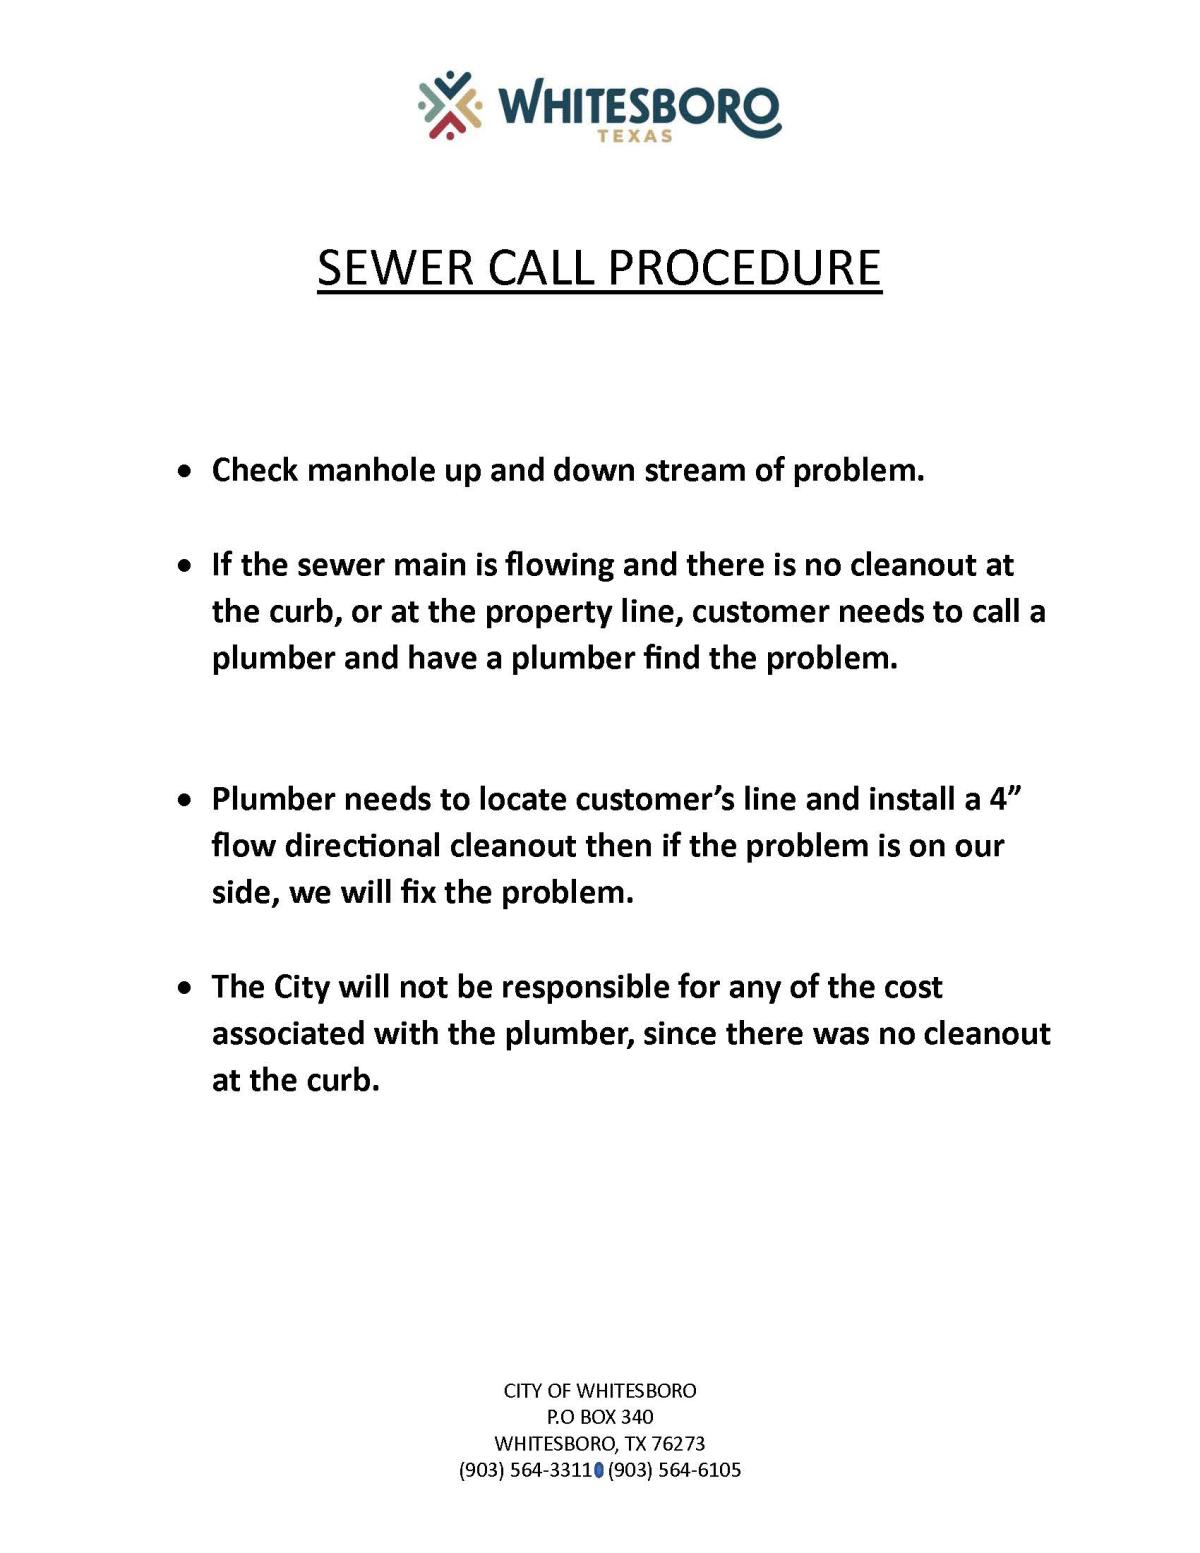 Sewer Call Procedure